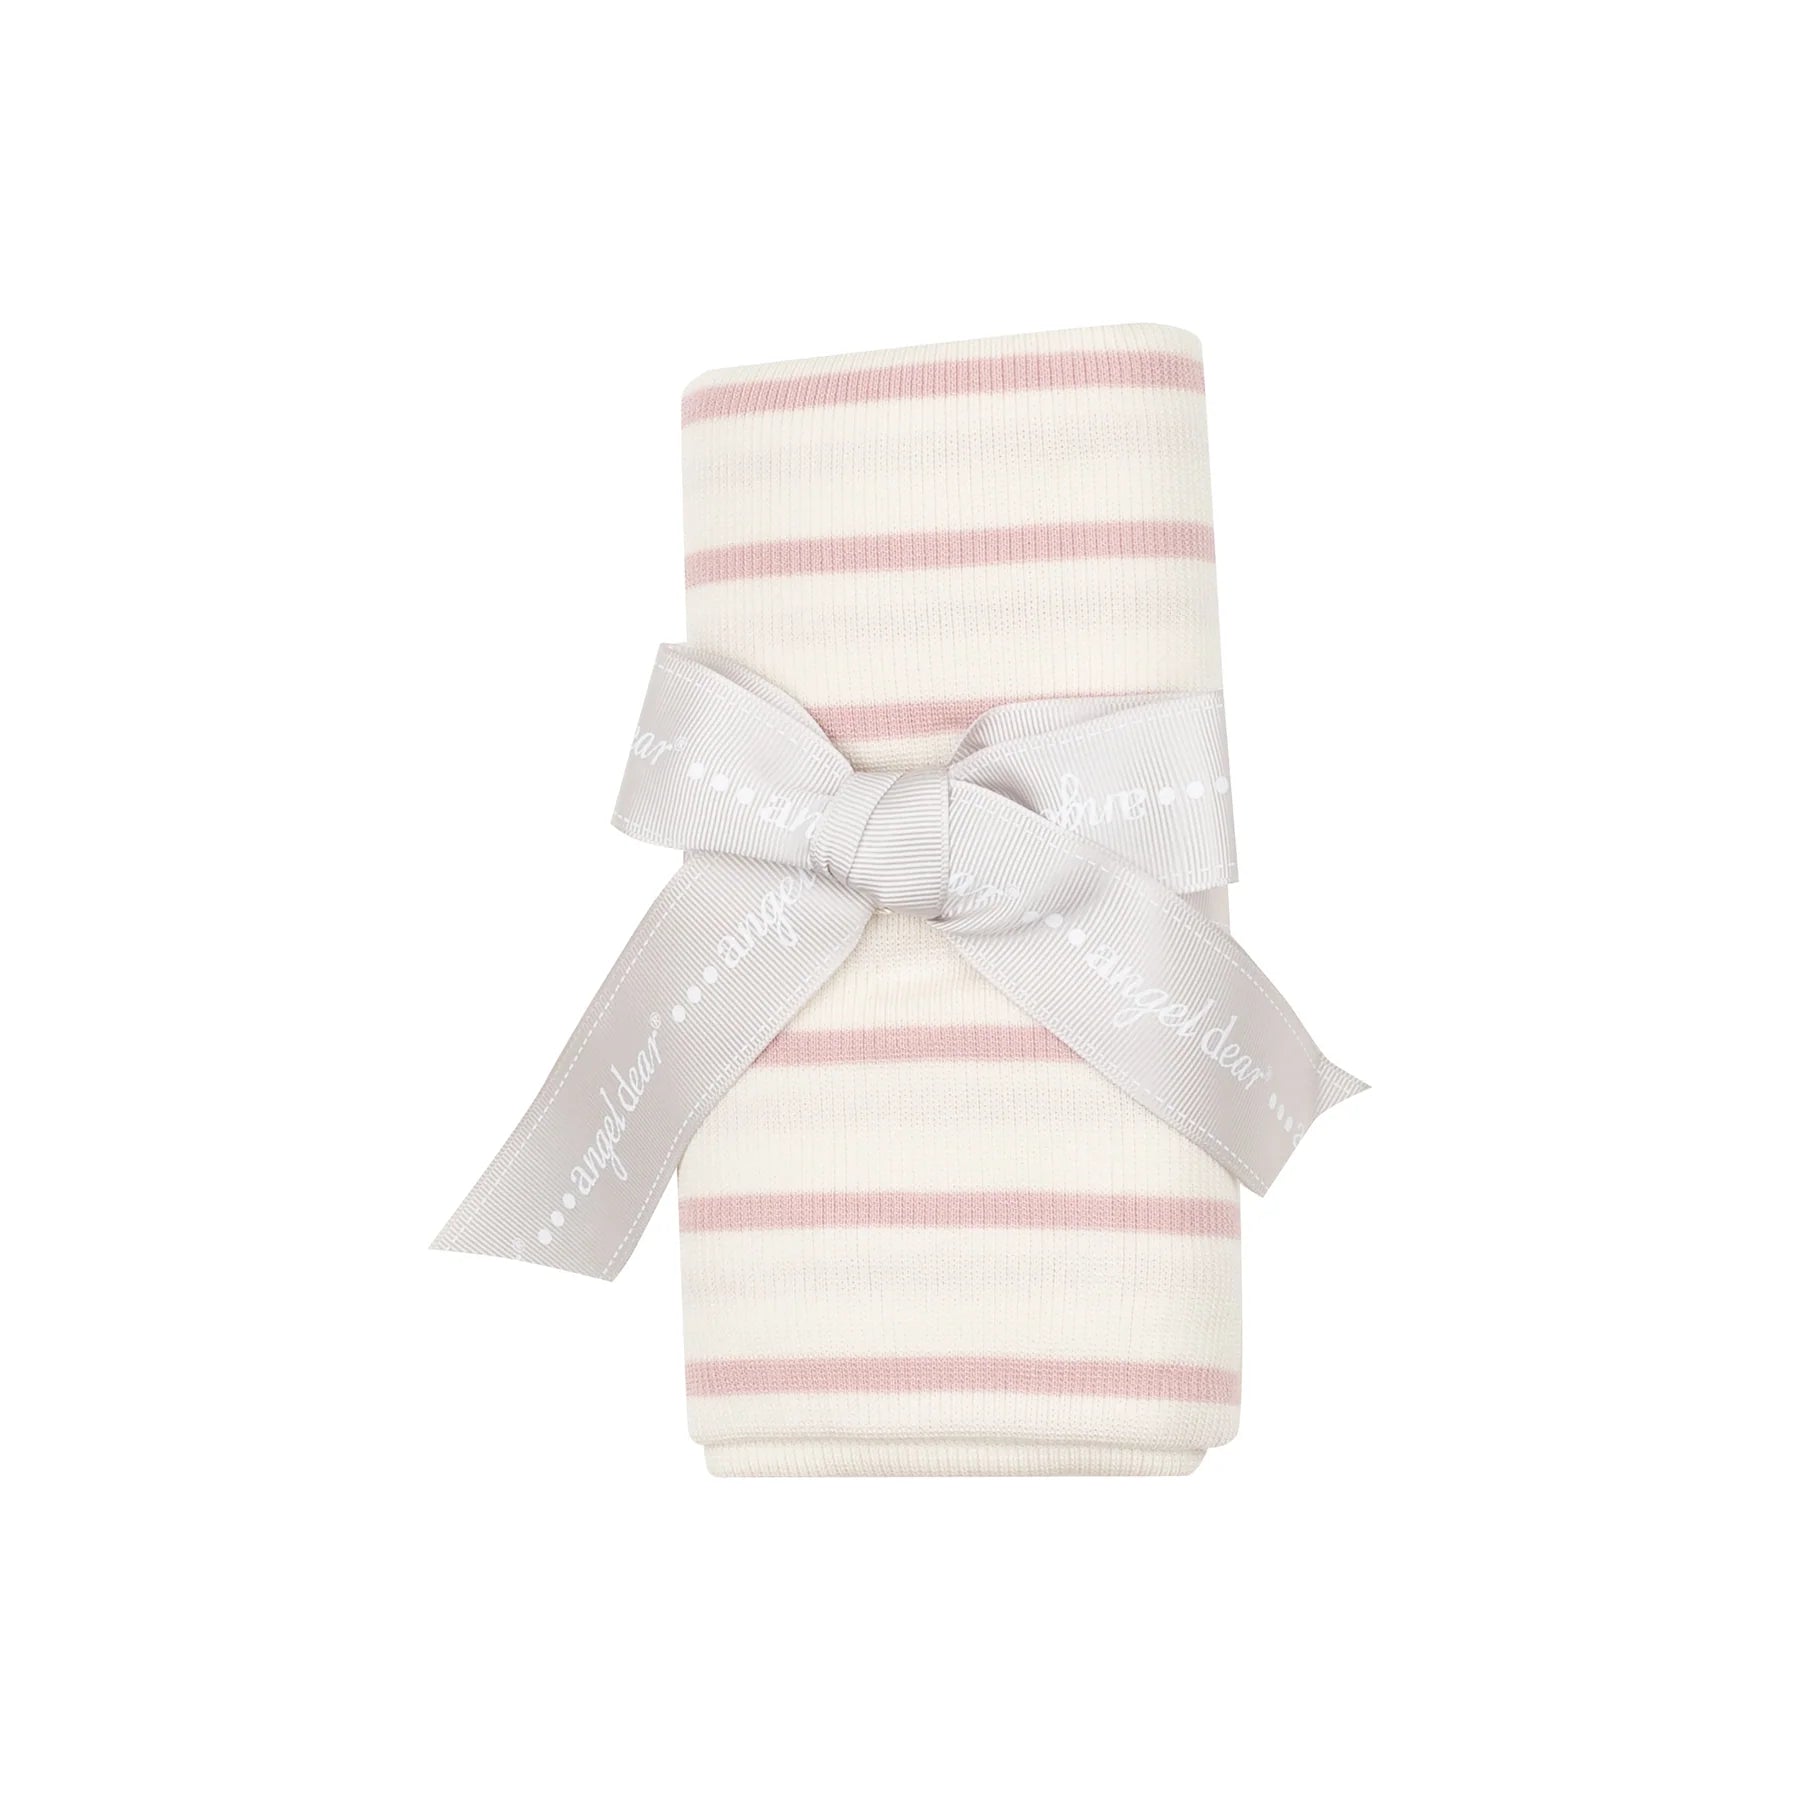 Silver Pink + Sugar Swizzle Ribbed Swaddle Blanket - Twinkle Twinkle Little One